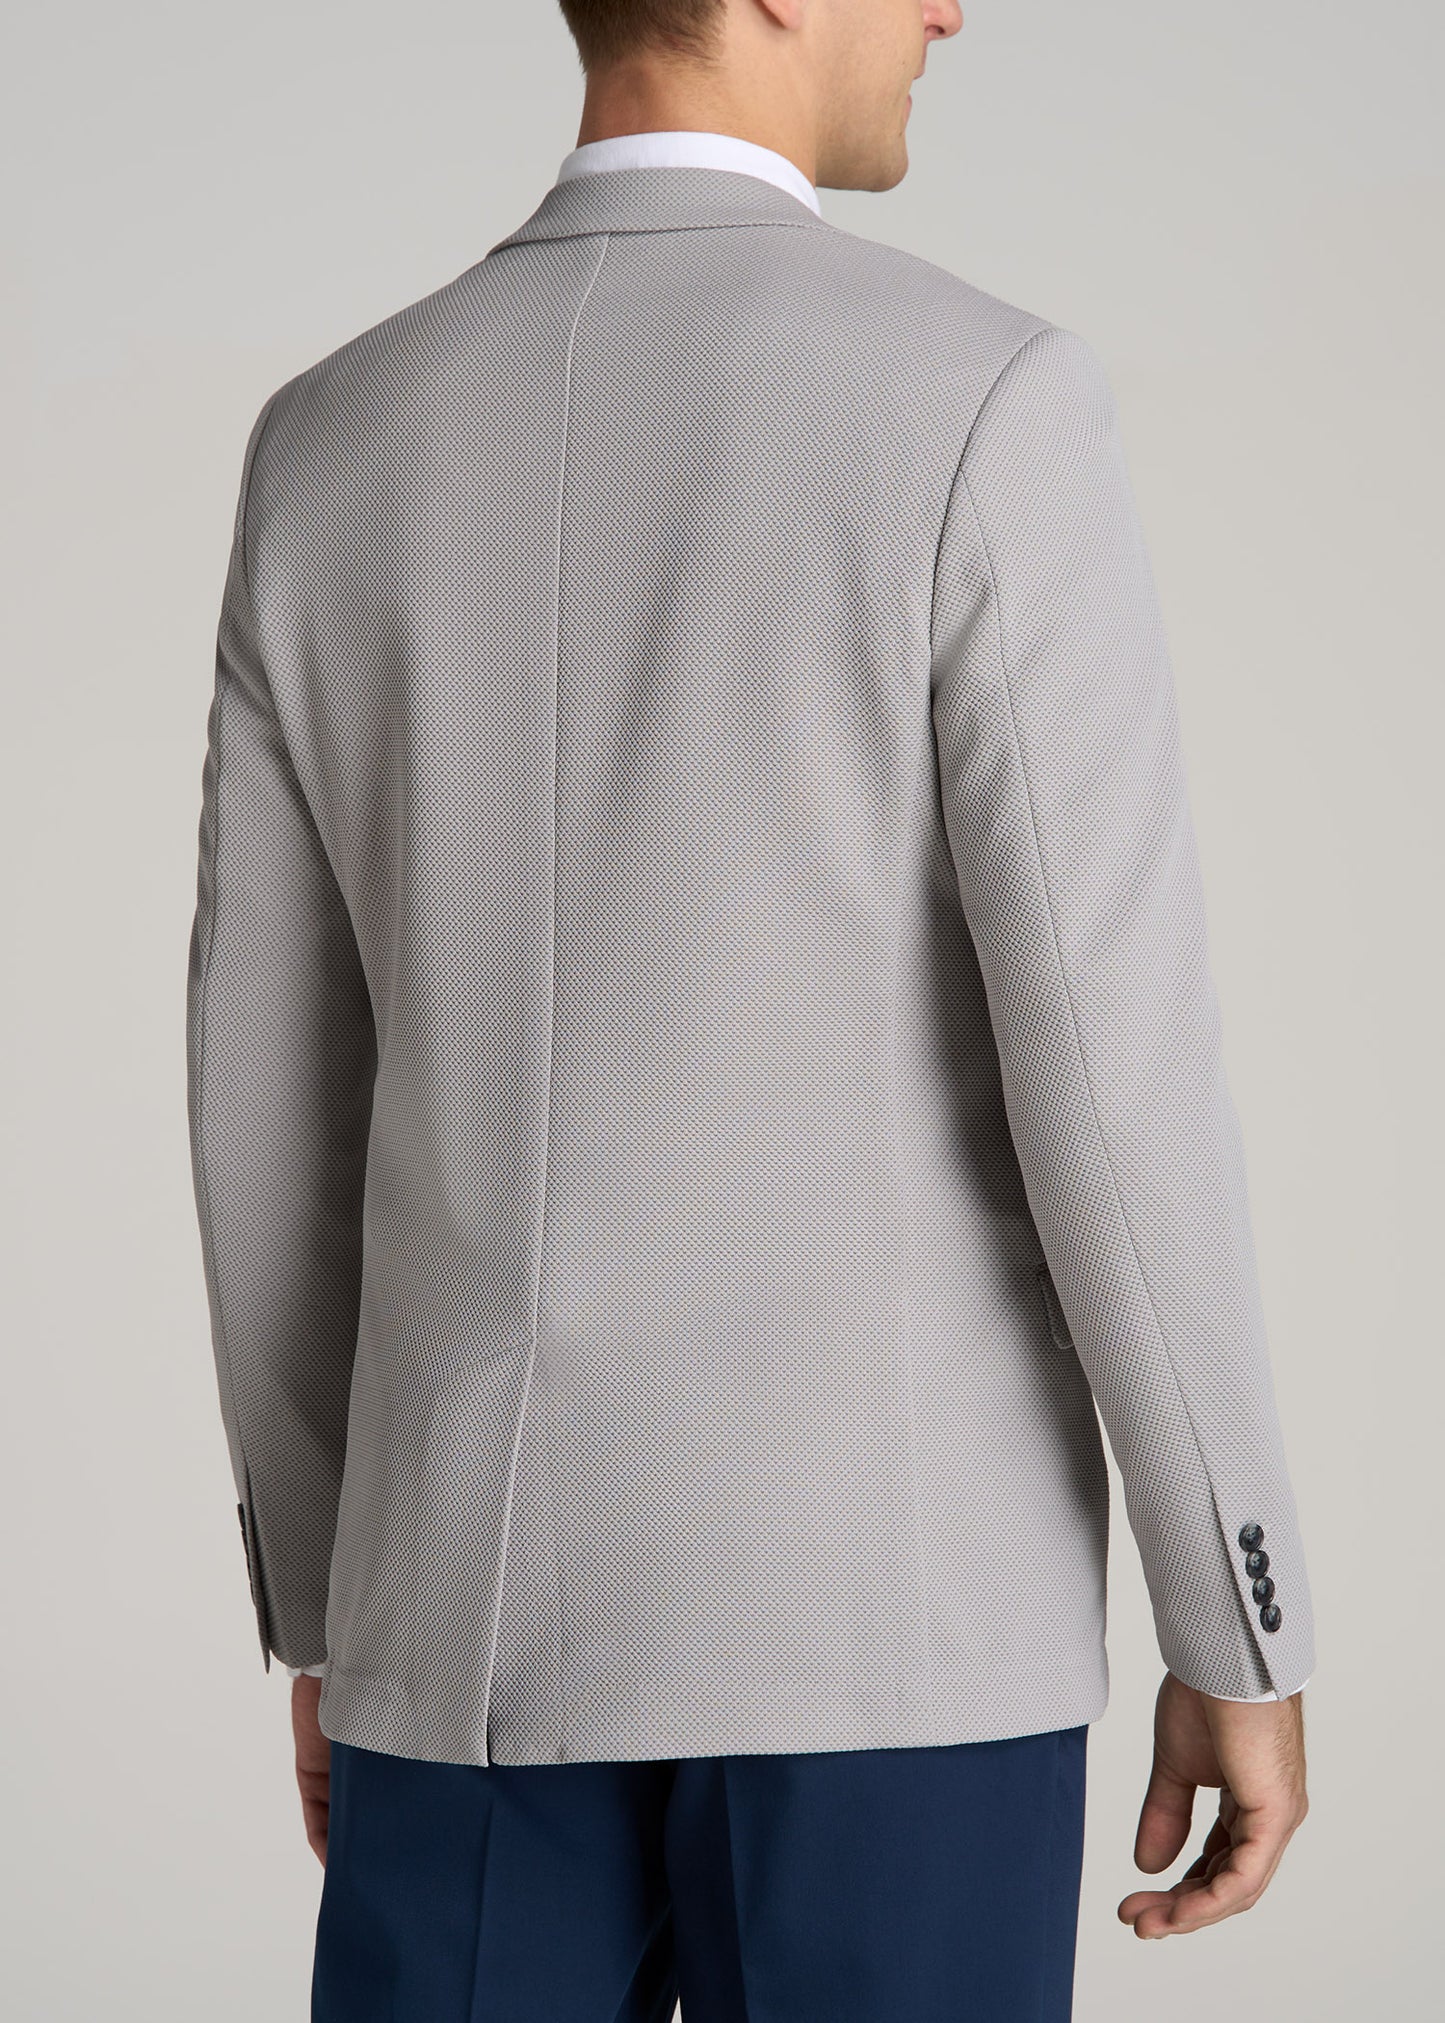 Textured Blazer for Tall Men in Soft Grey